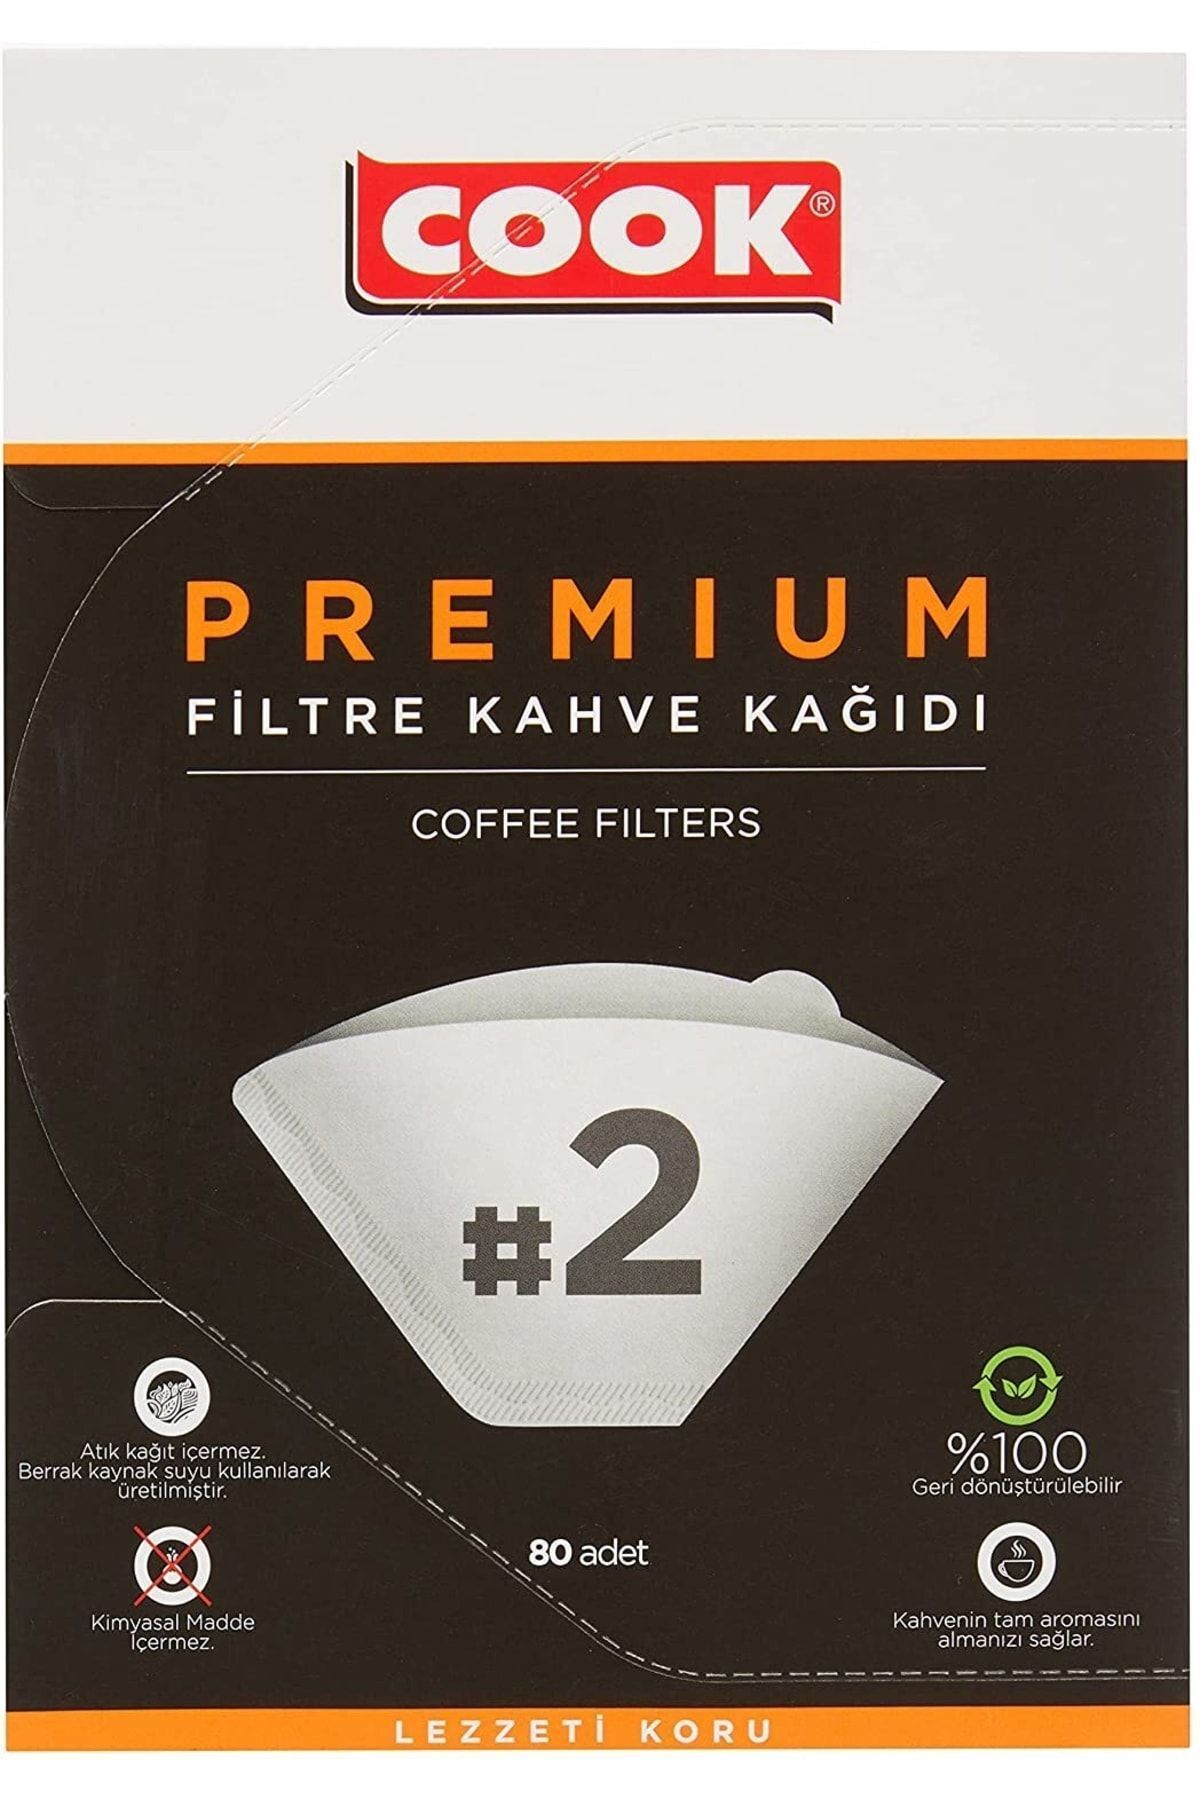 COOK Premium Filtre Kahve Kağıdı - Ebat 2